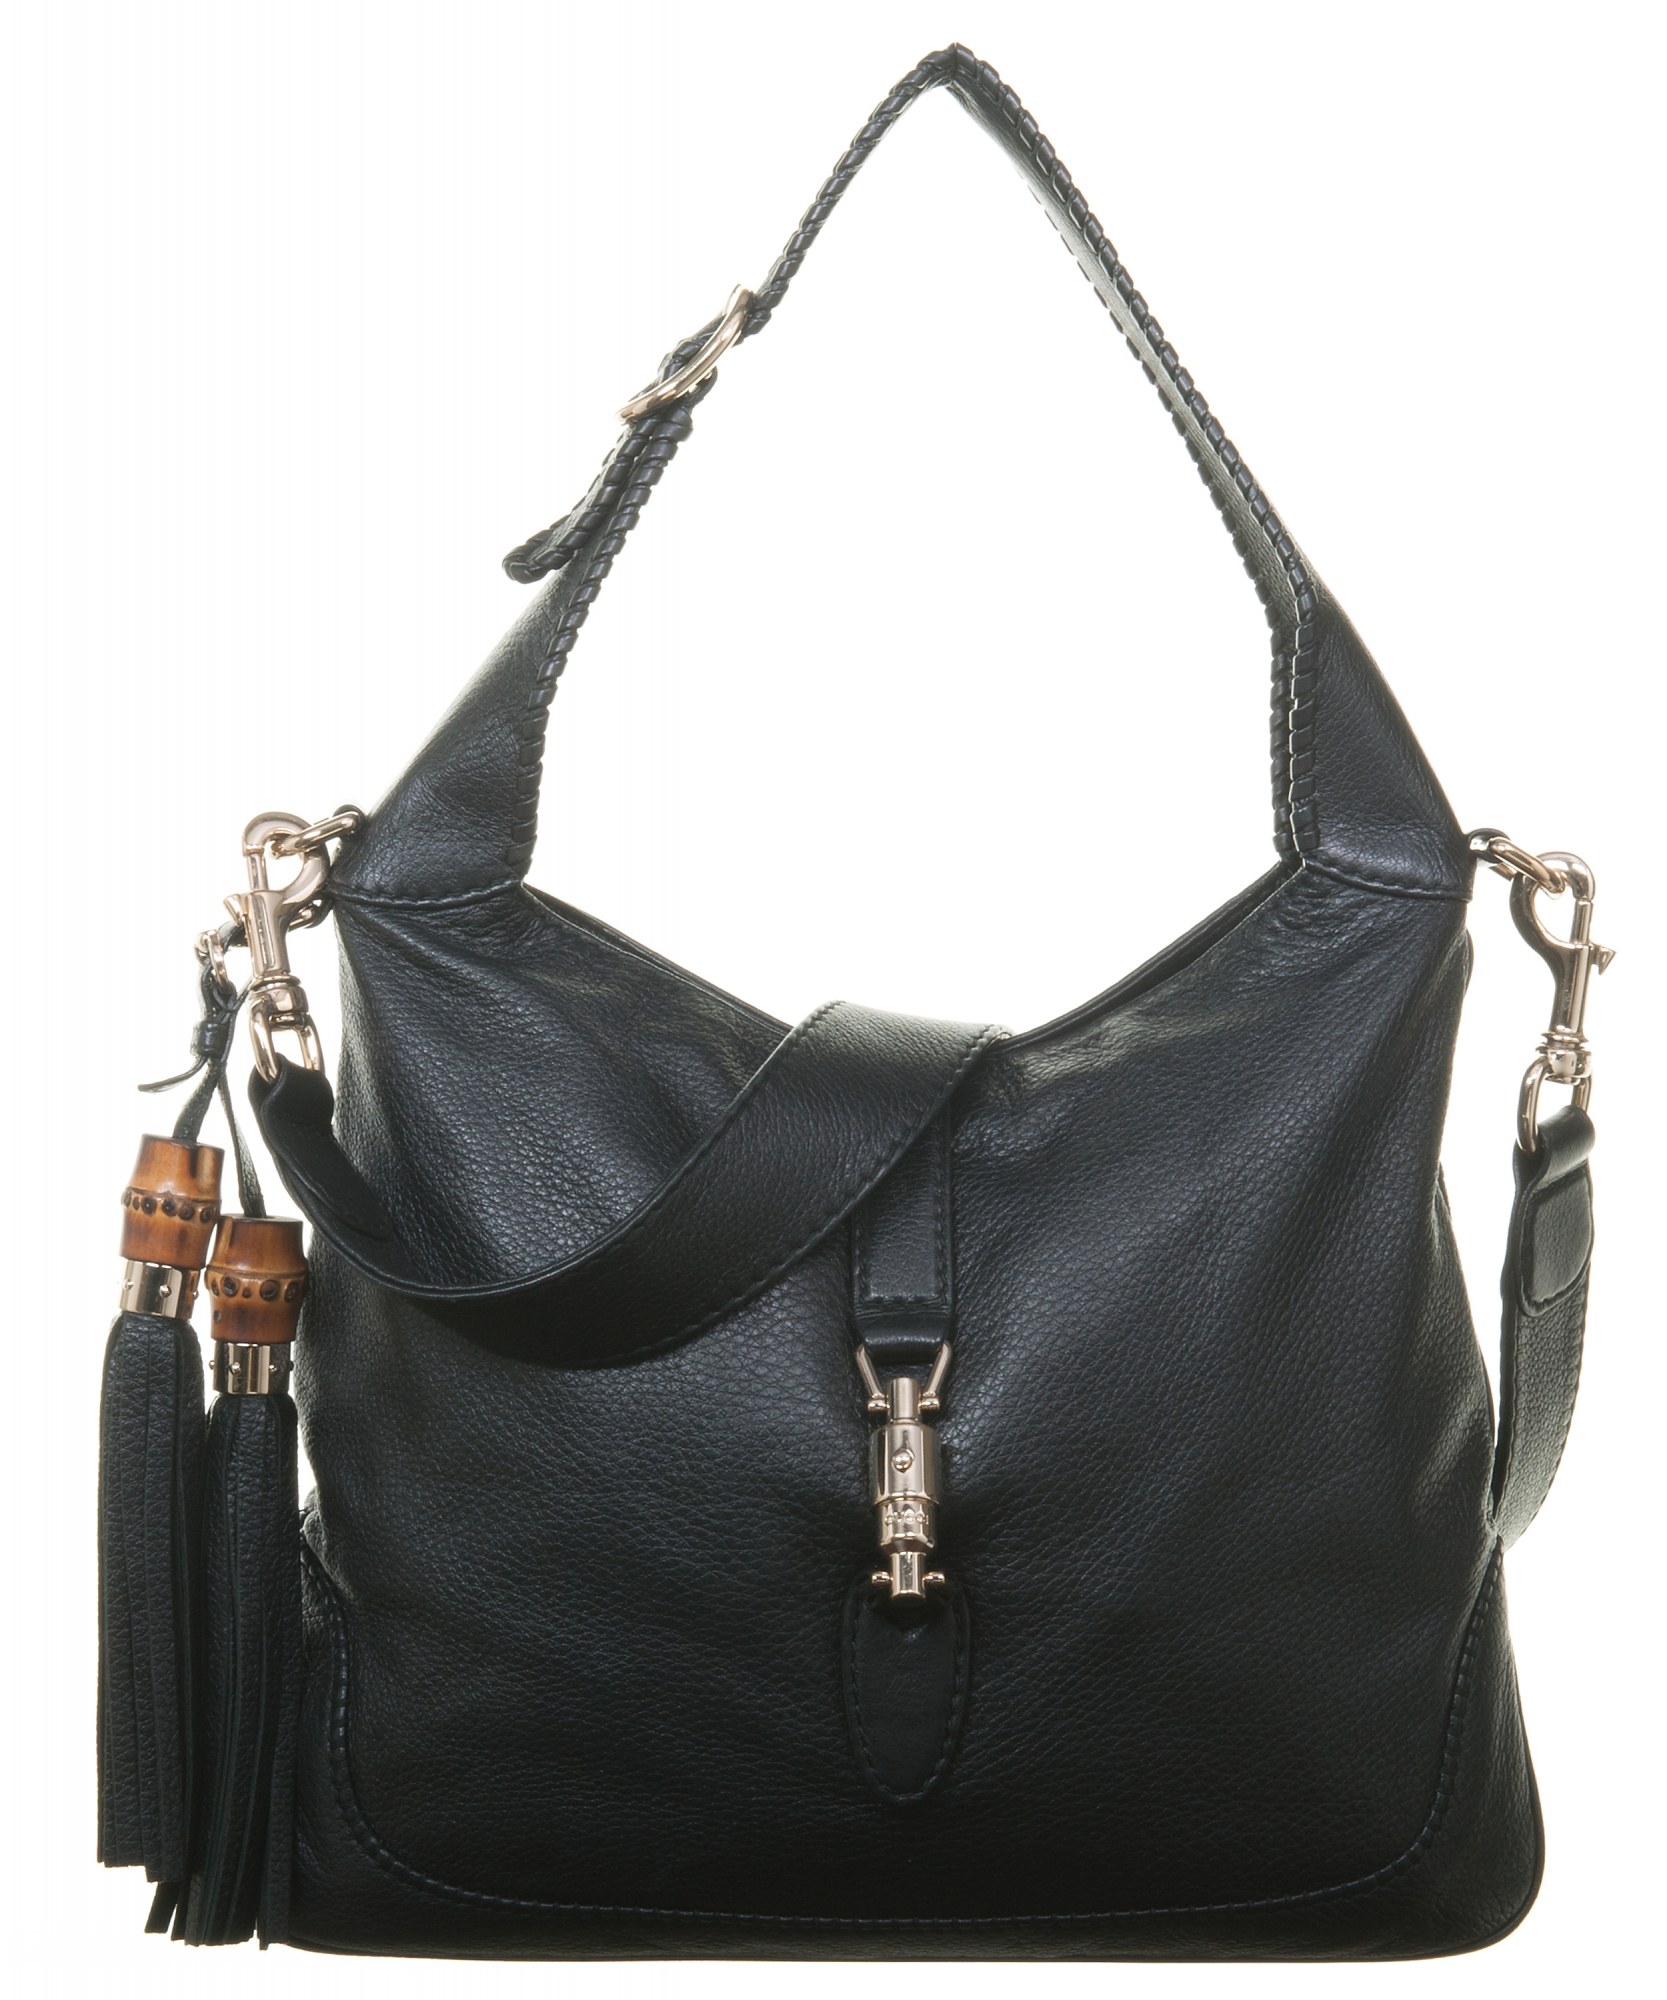 Gucci 'New Jackie' Black Leather Shoulder Bag - Gucci | La Doyenne